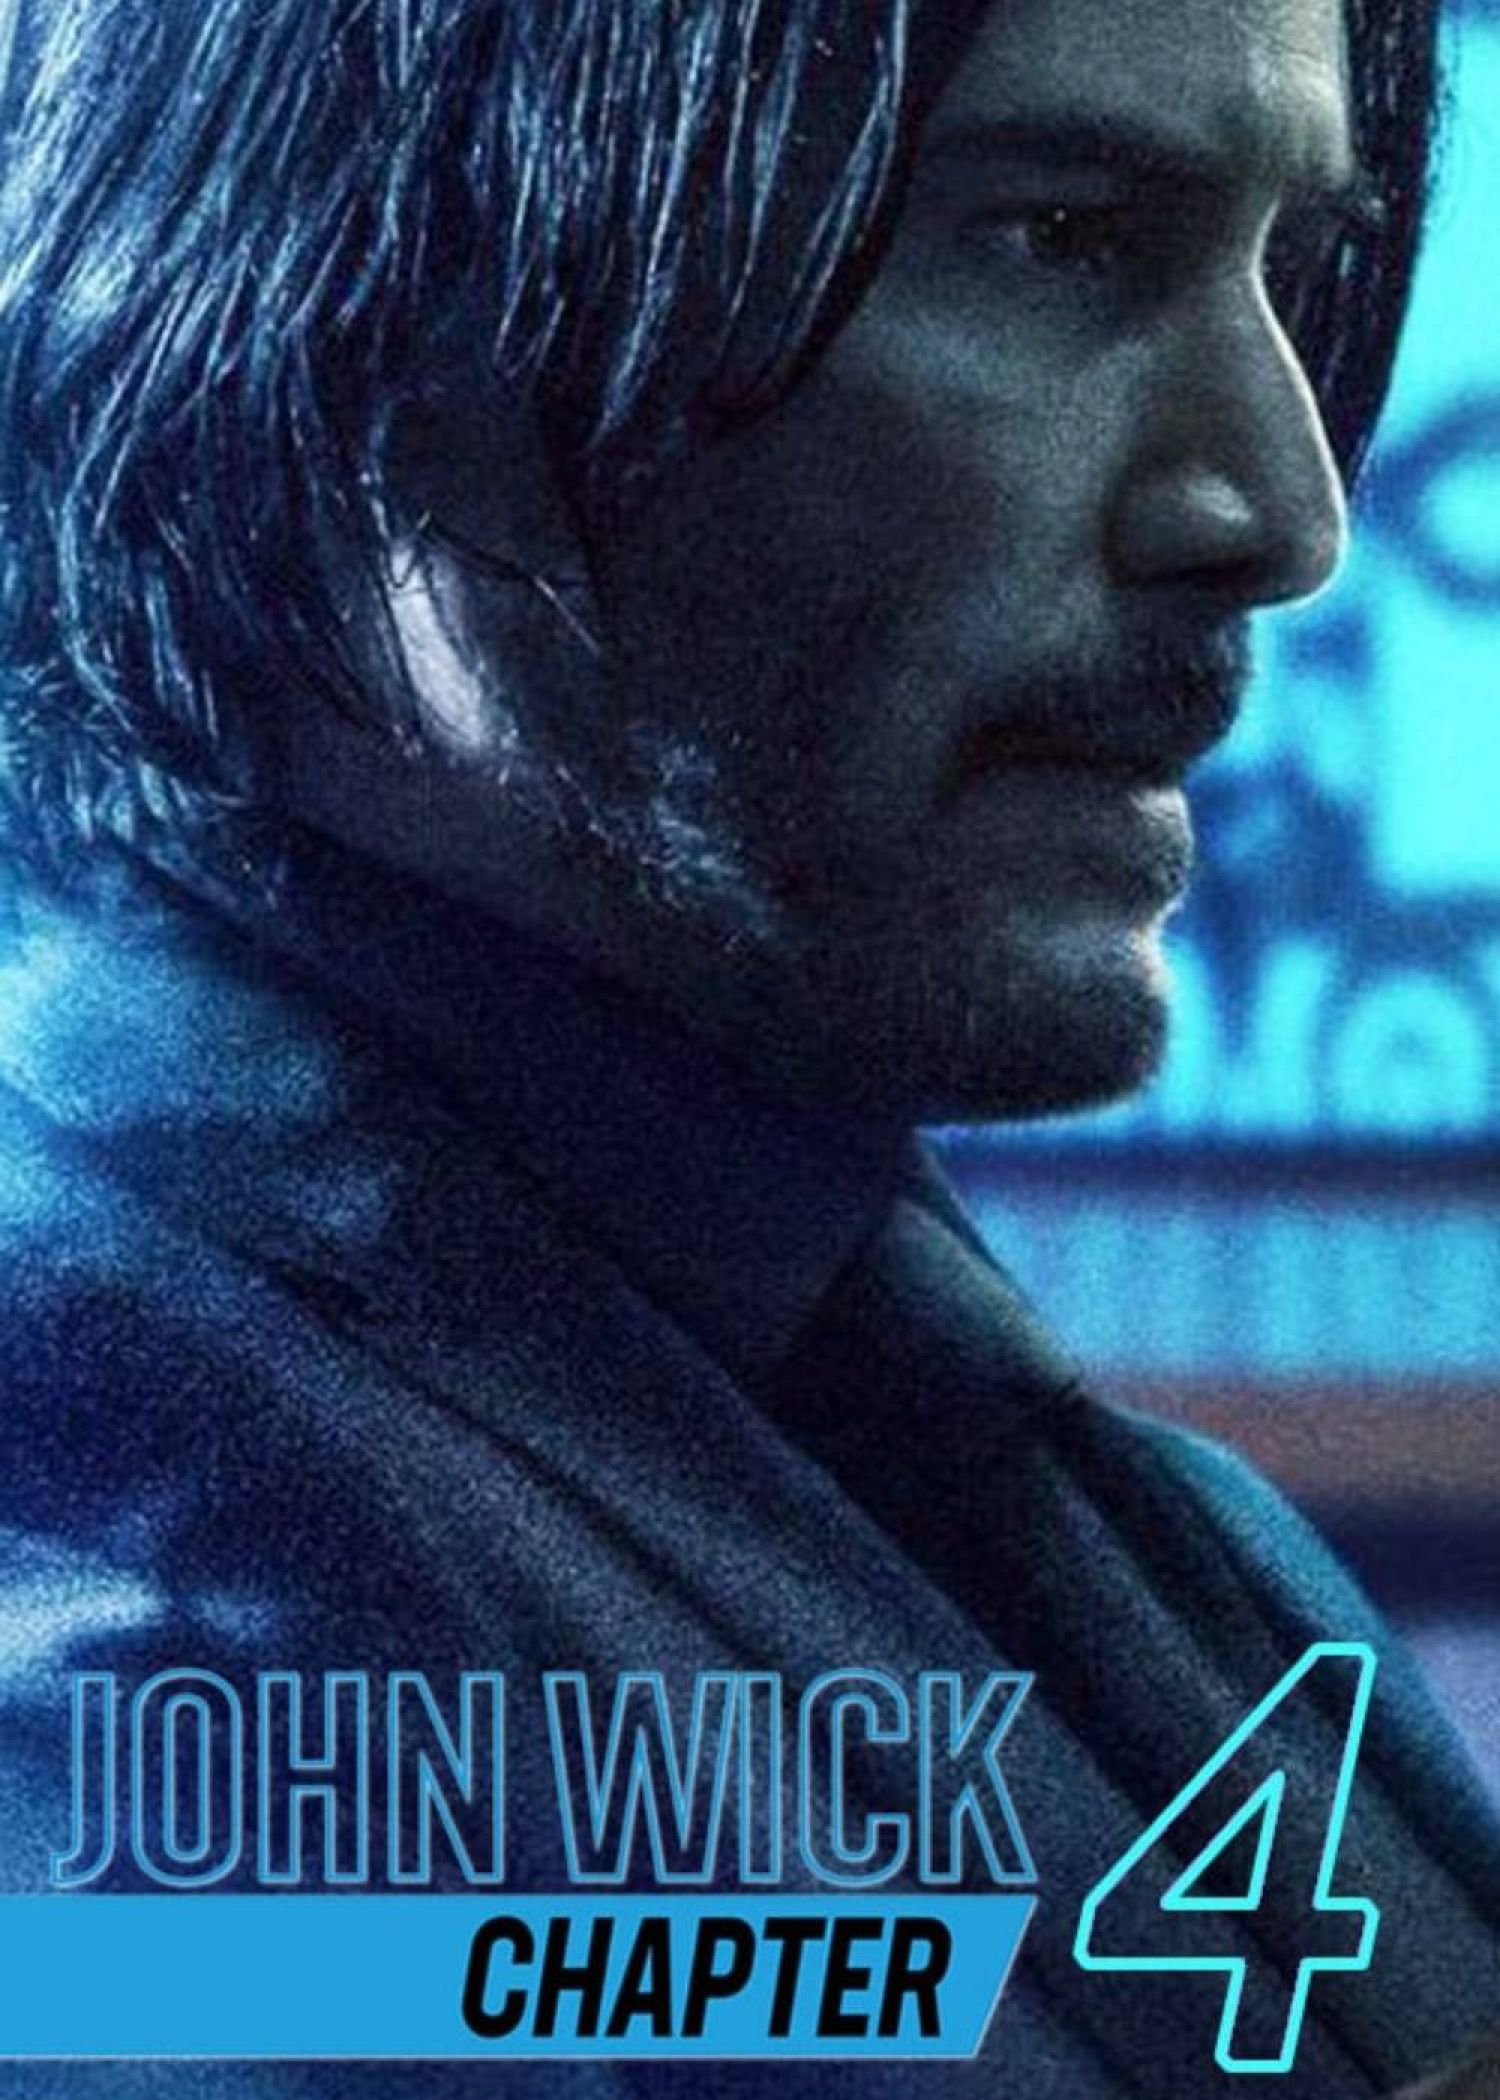 FILMES NO DRIVE ☠️ on X: john wick 4 (filme) link